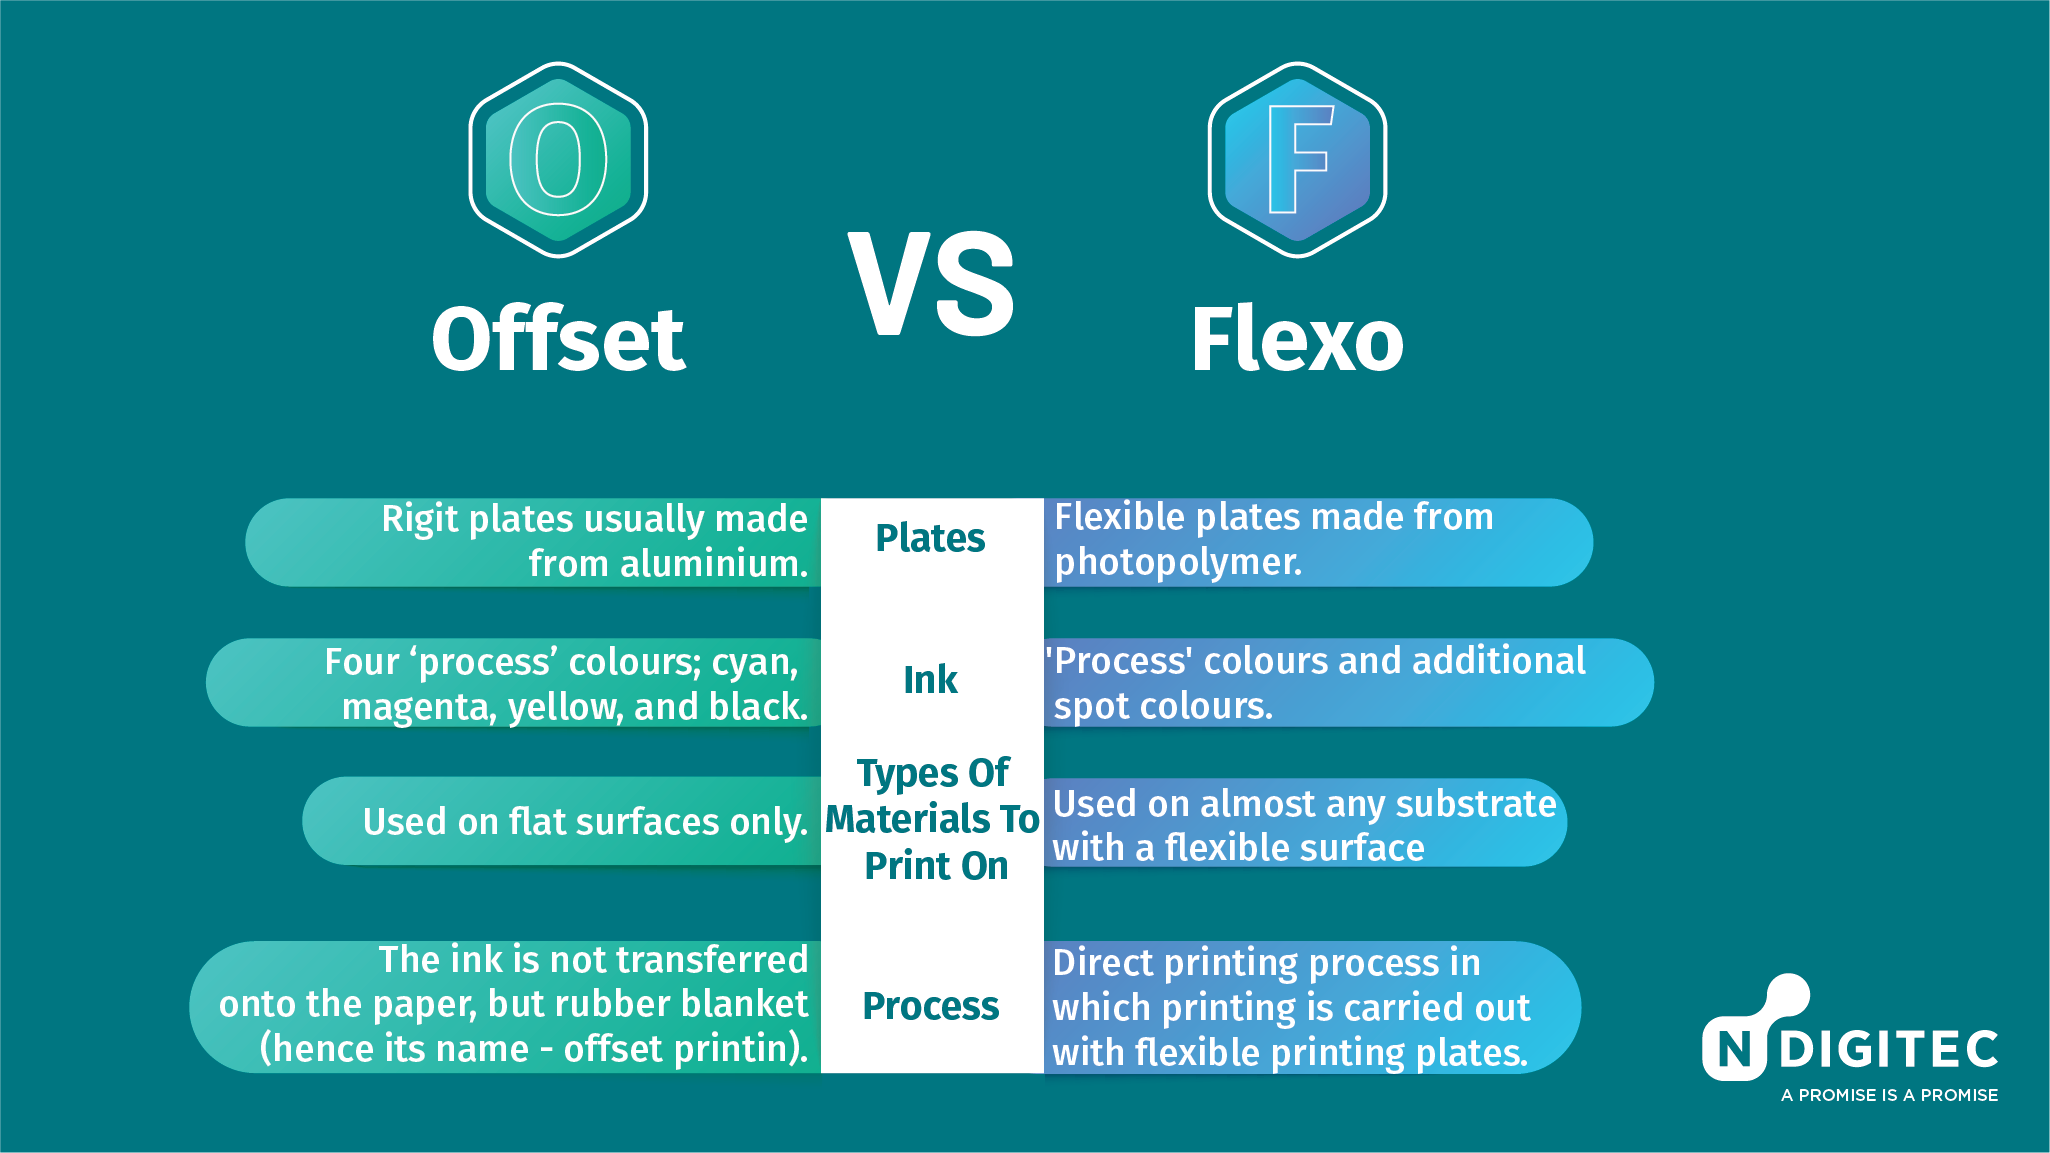 grafisk straf korrekt NDIGITEC on Twitter: "Know the difference. 😉😎 #NDigitec #Premedia  #Prepress #Digiprint #DigitalProduction #printing #Dubai #UAE #flexo # flexoprinting #screenprinting #digitalprinting #offsetprinting #3dprinting # offset #offsetprinting ...